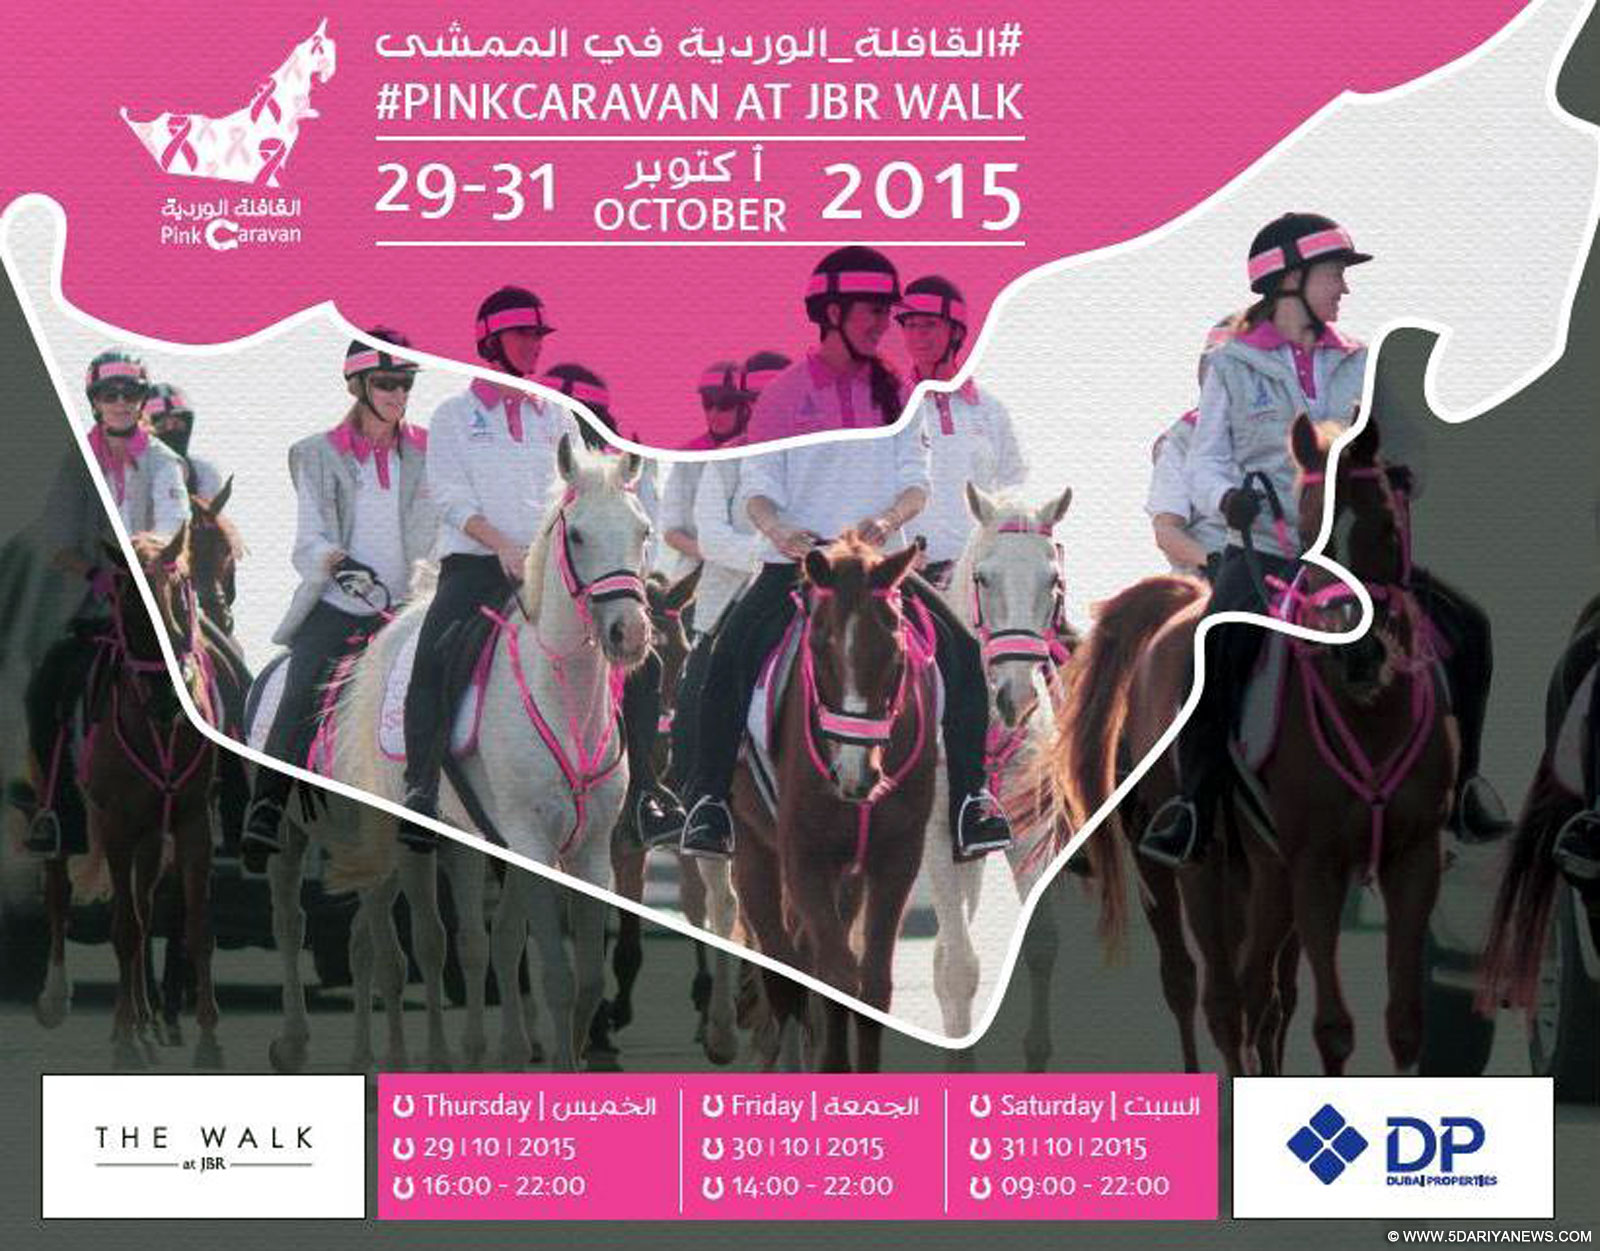 Pink Caravan partners with Dubai Properties to raise breast cancer awareness